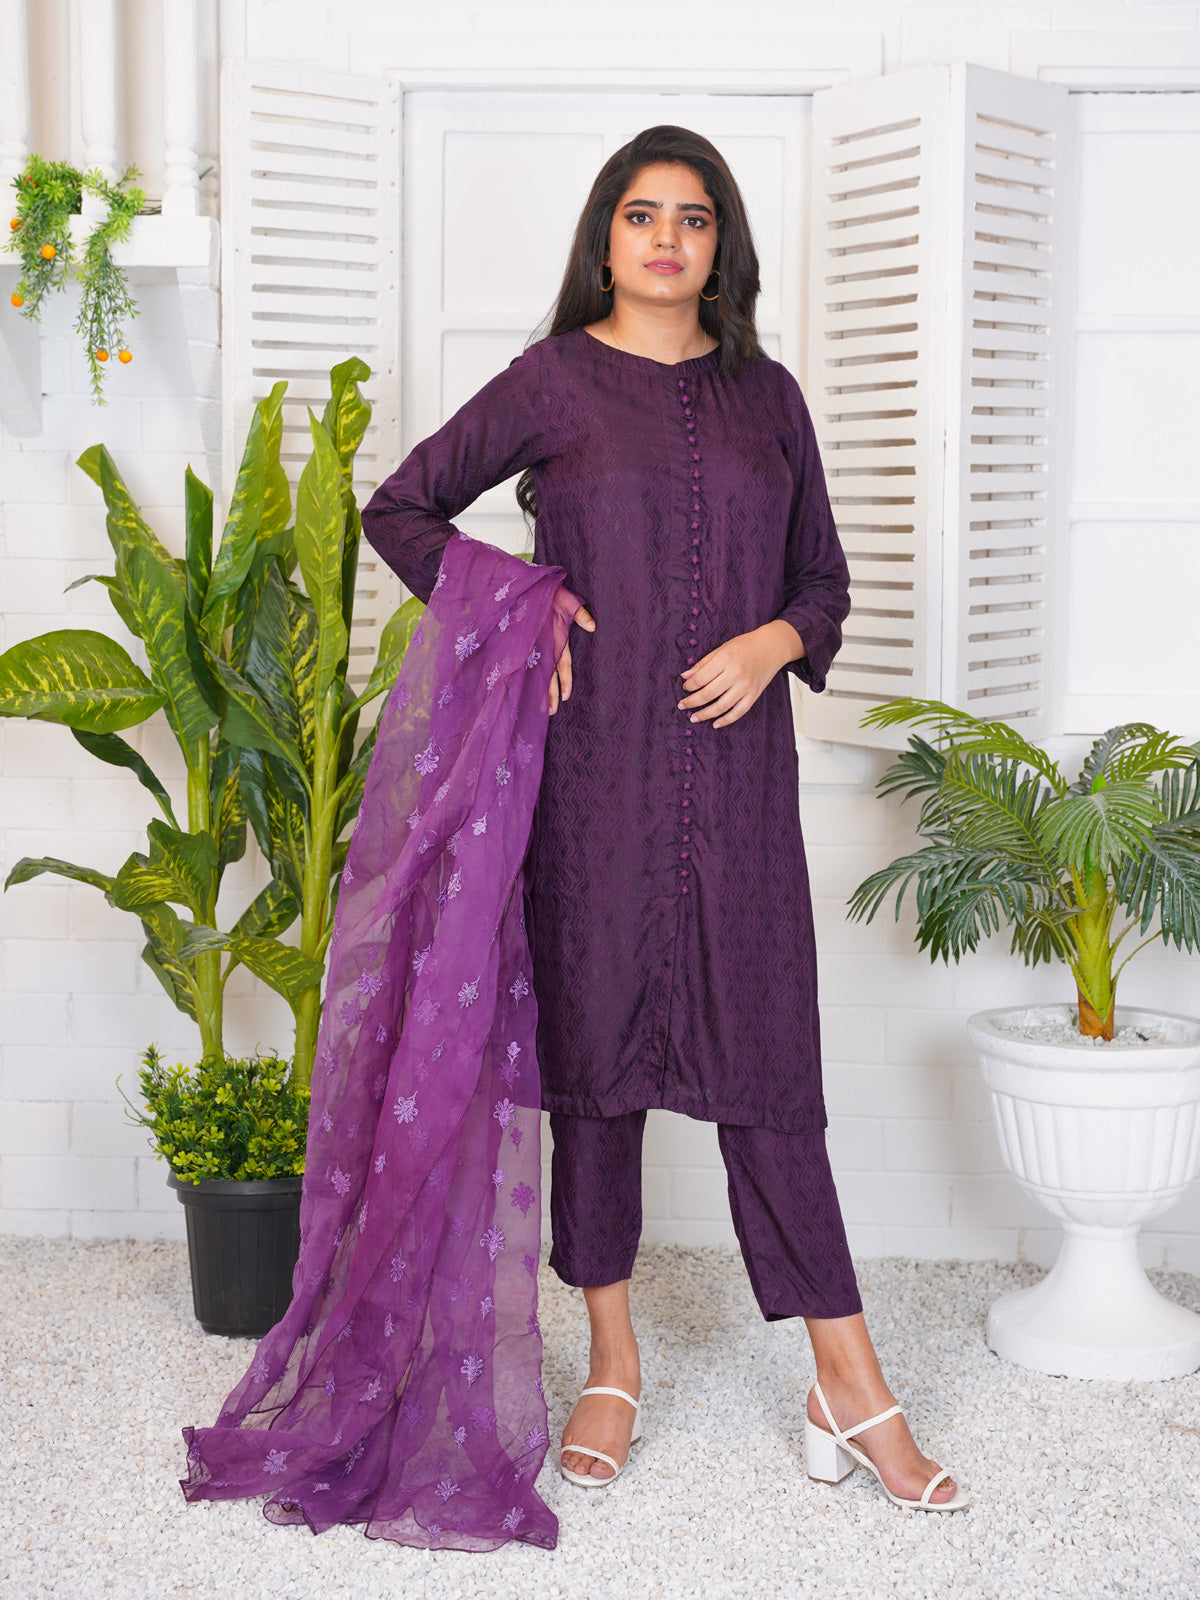 Elegant purple long shirt - a top women's choice." LTL 7862229